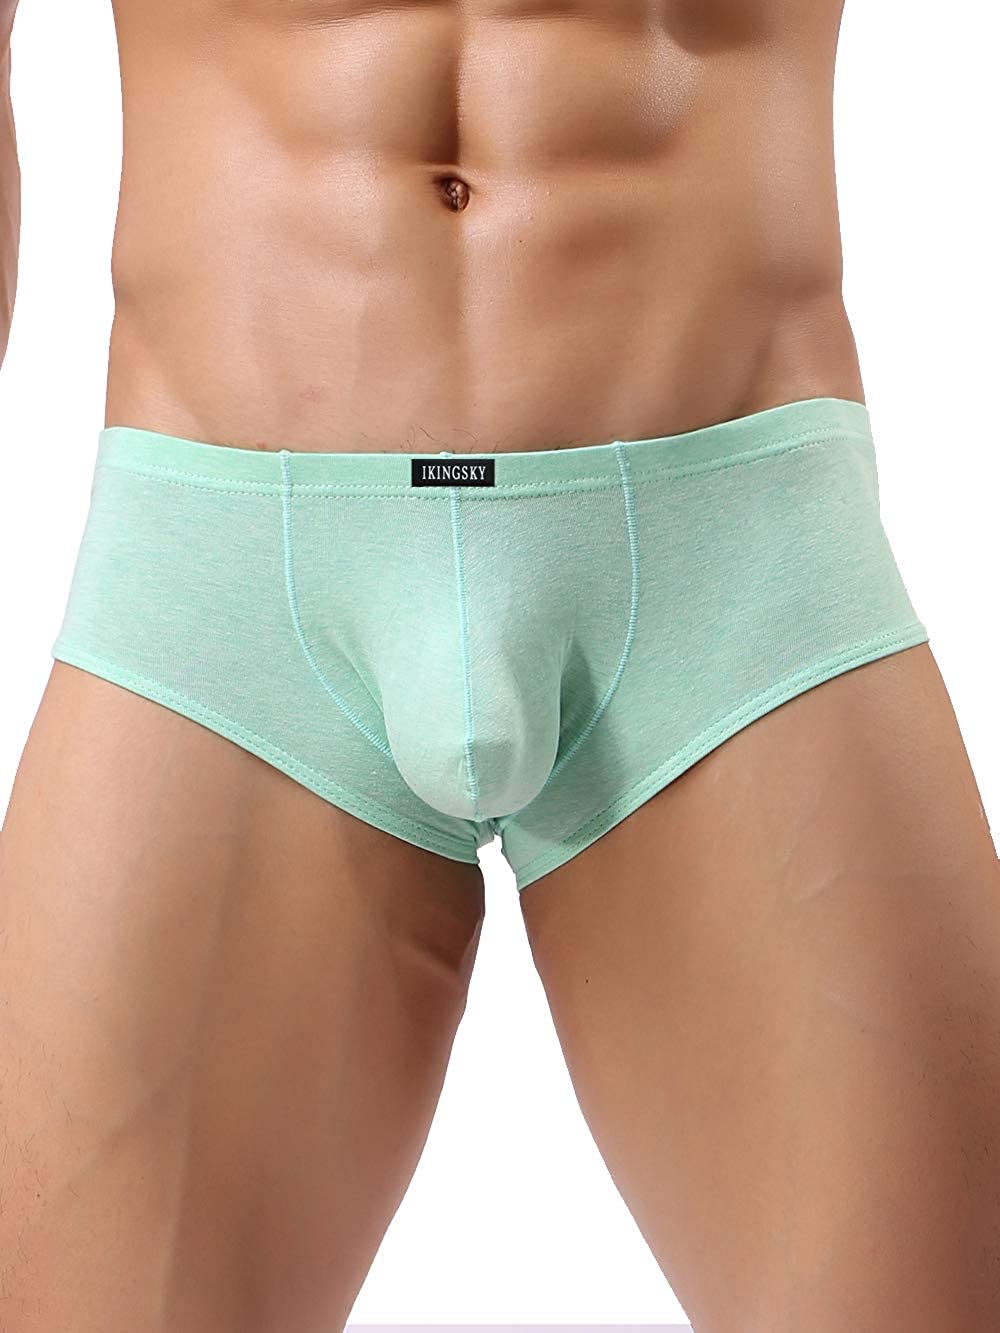 Ikingsky Mens Cotton Boxer Briefs Underwear Sexy Low Rise Men Pouch 5338